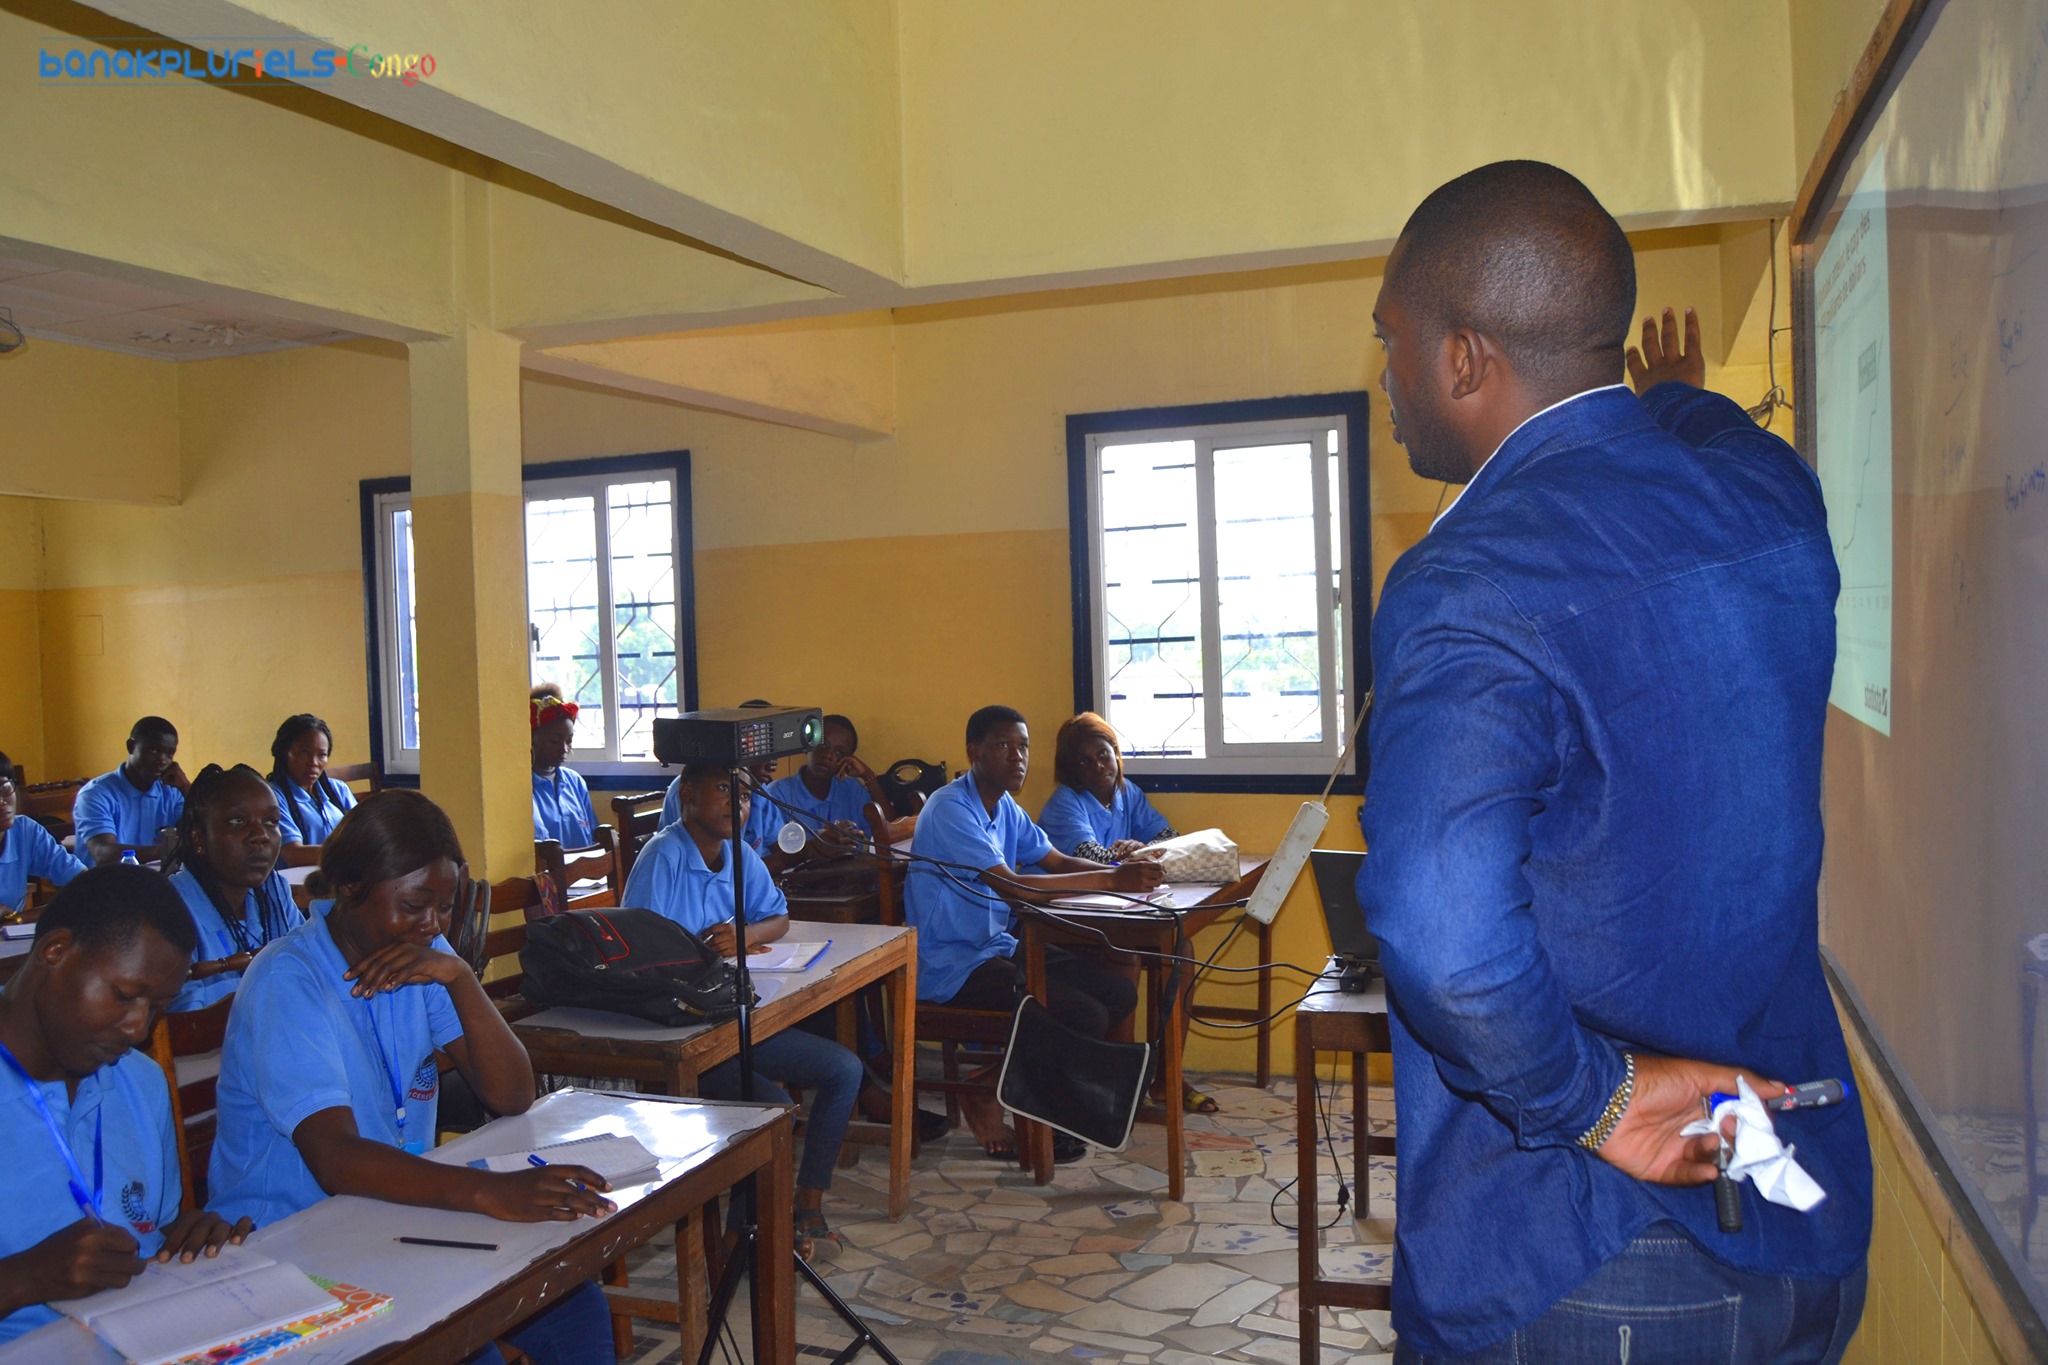 E-business-School-tours au Congo